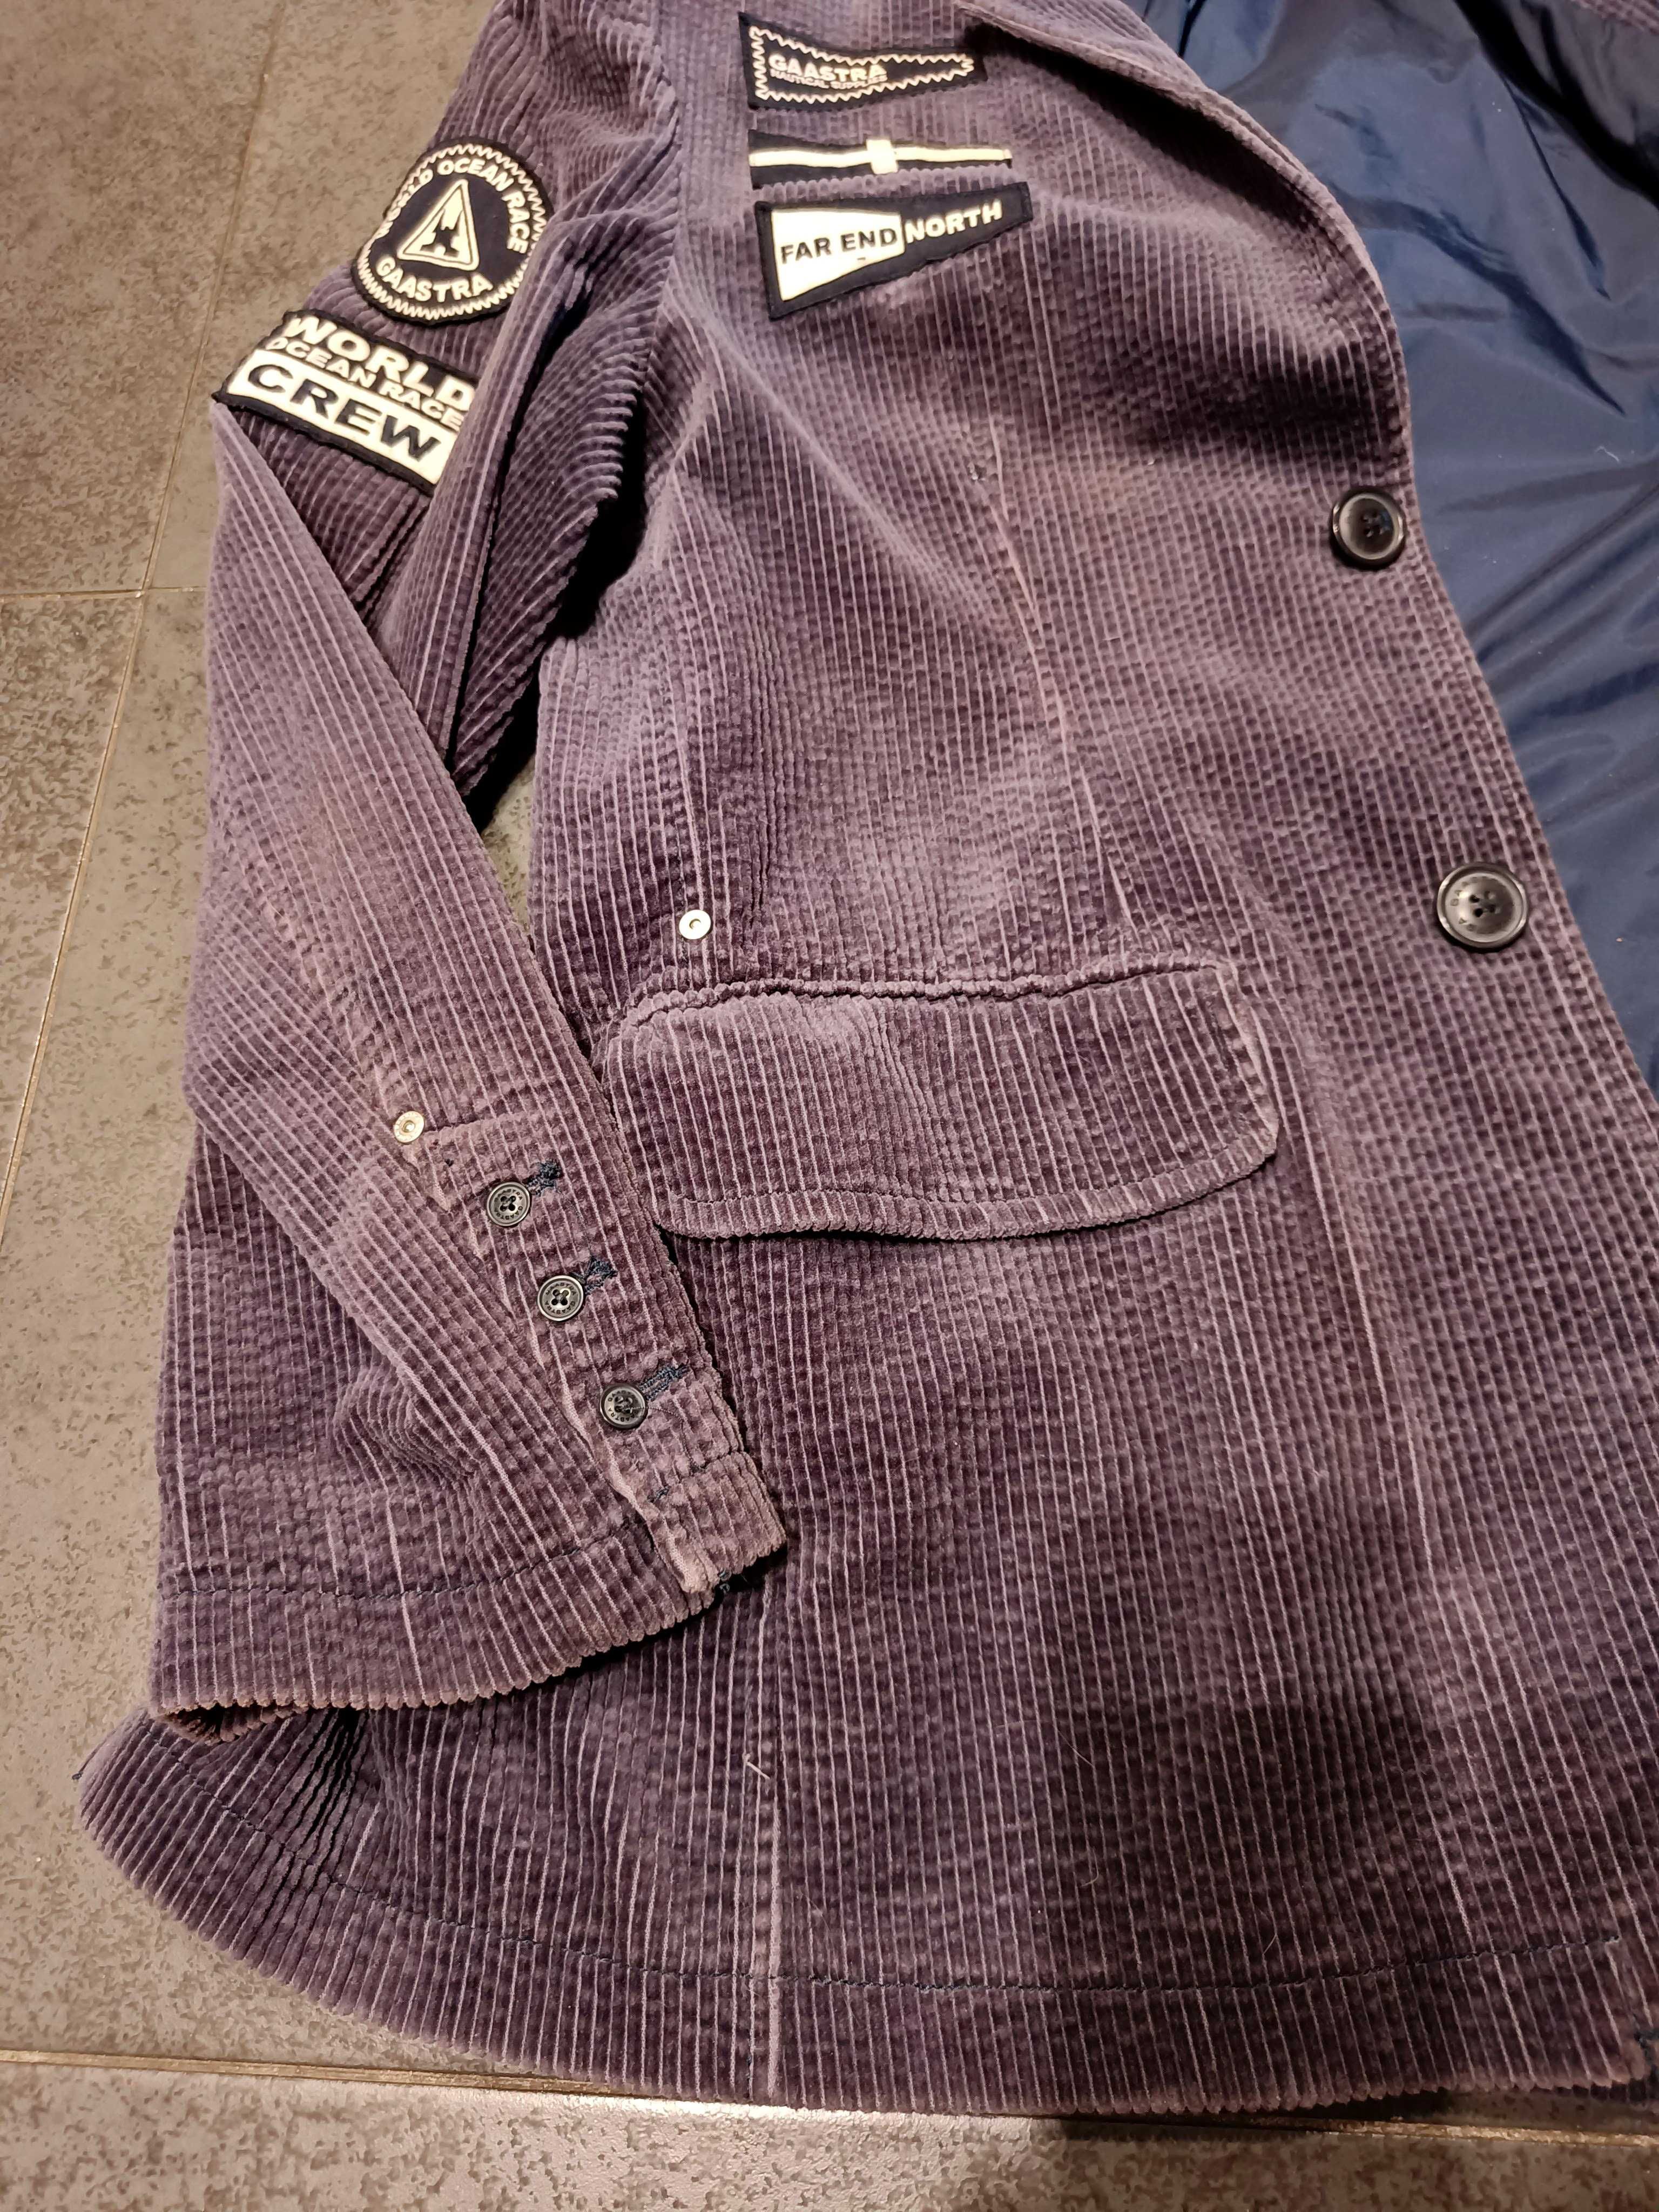 Пиджак вельветовый, мужской. Размер  XL-XLL, Цвет-серый, Бренд Gaastra